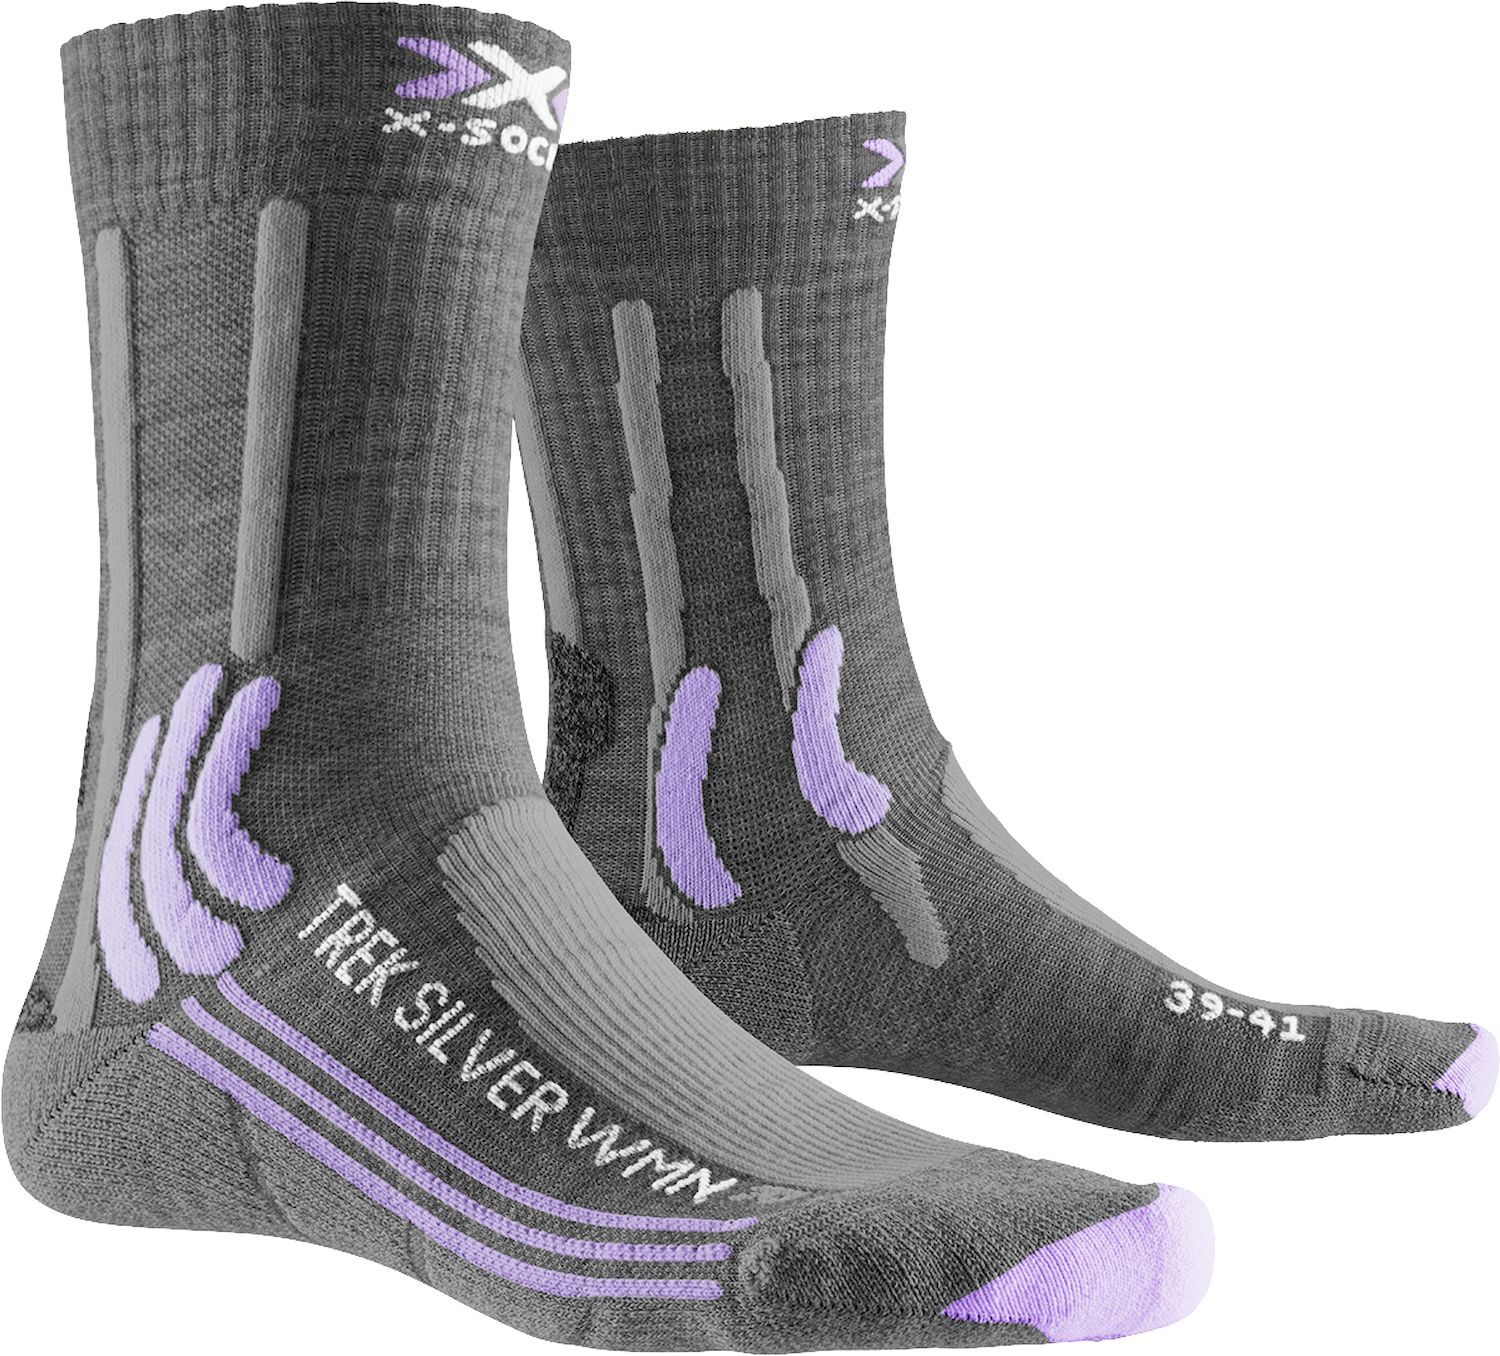 X-Socks Trek Silver - Hiking socks - Women's